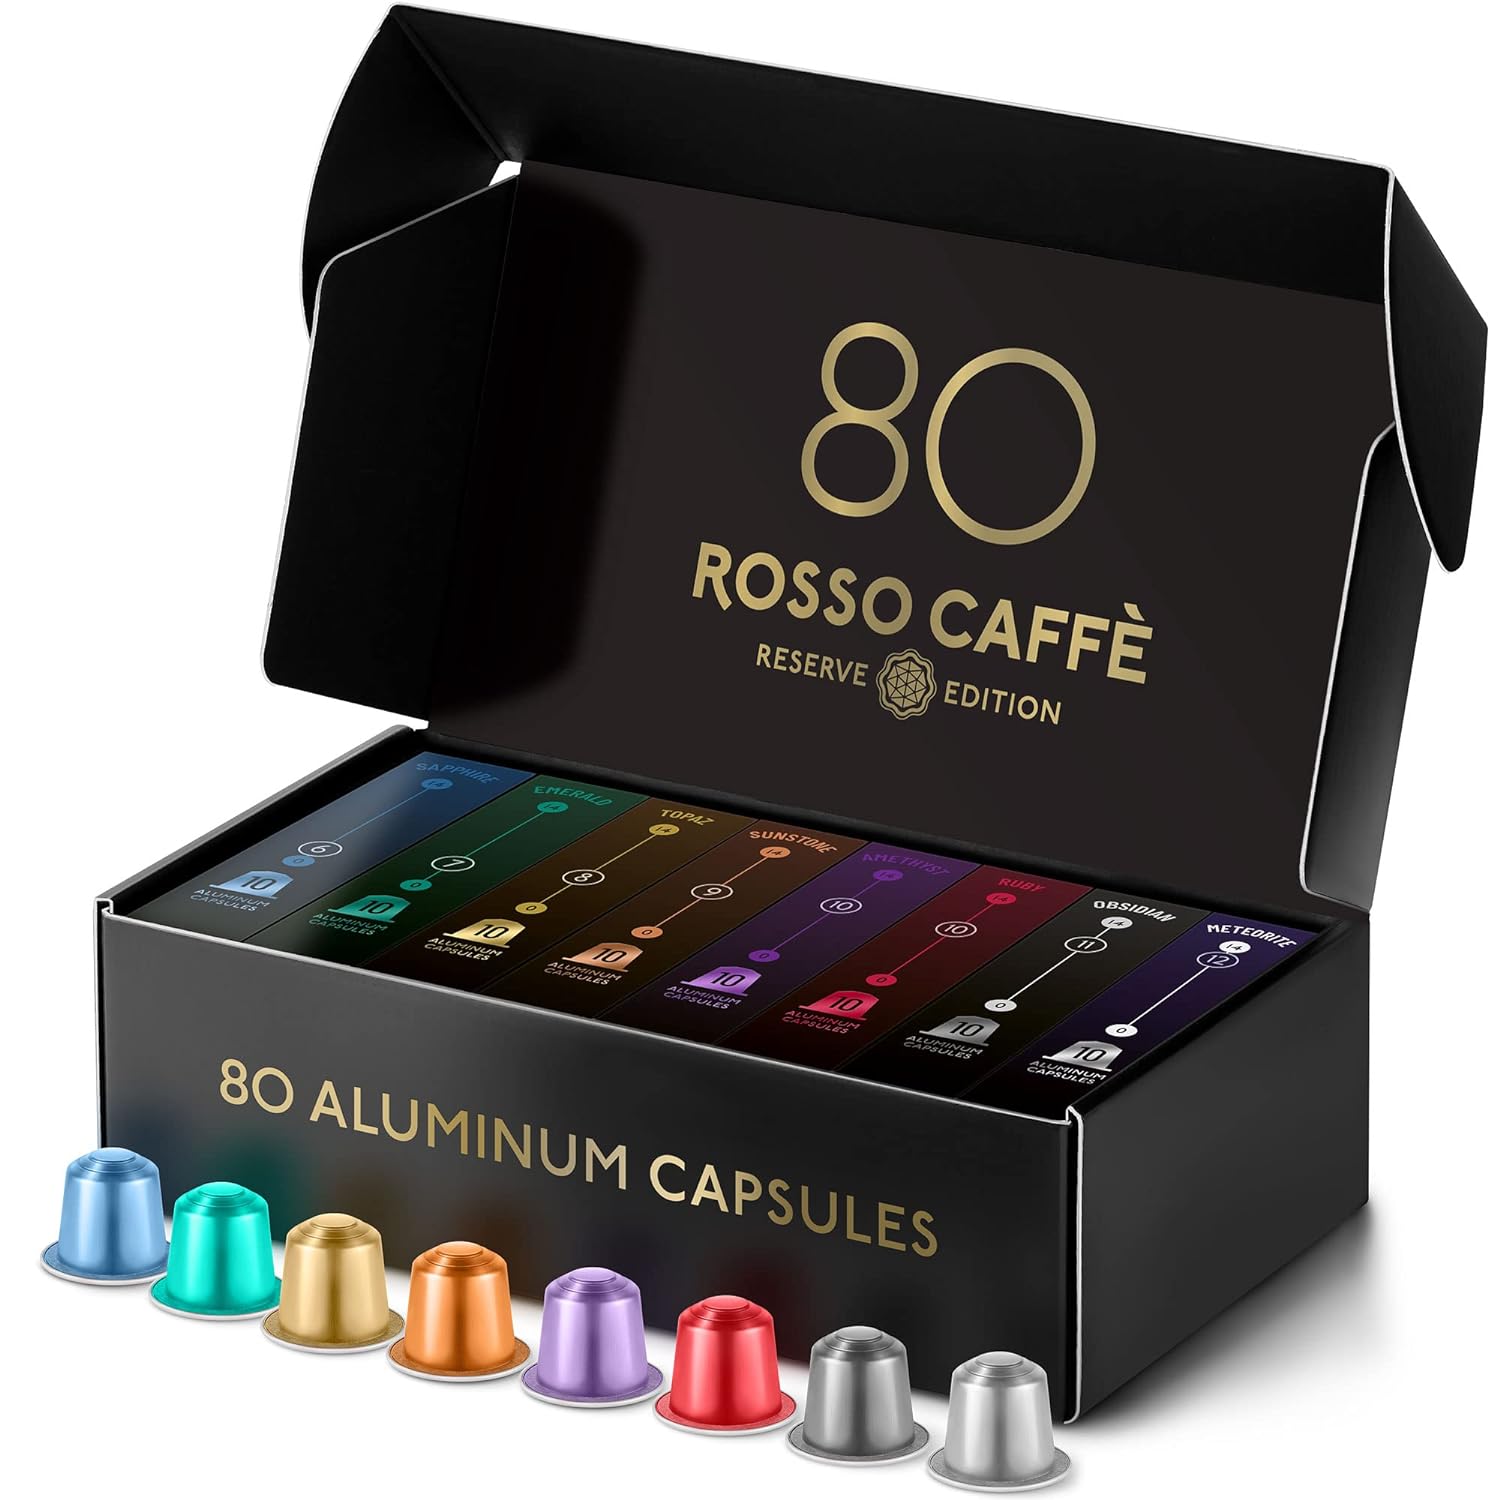 Rosso Coffee Espresso Coffee Pods for Nespresso Machines - Reserve Edition - 80 Aluminium Pods - Compatible With All Nespresso Original Line Machines (Premium Variety Pack)